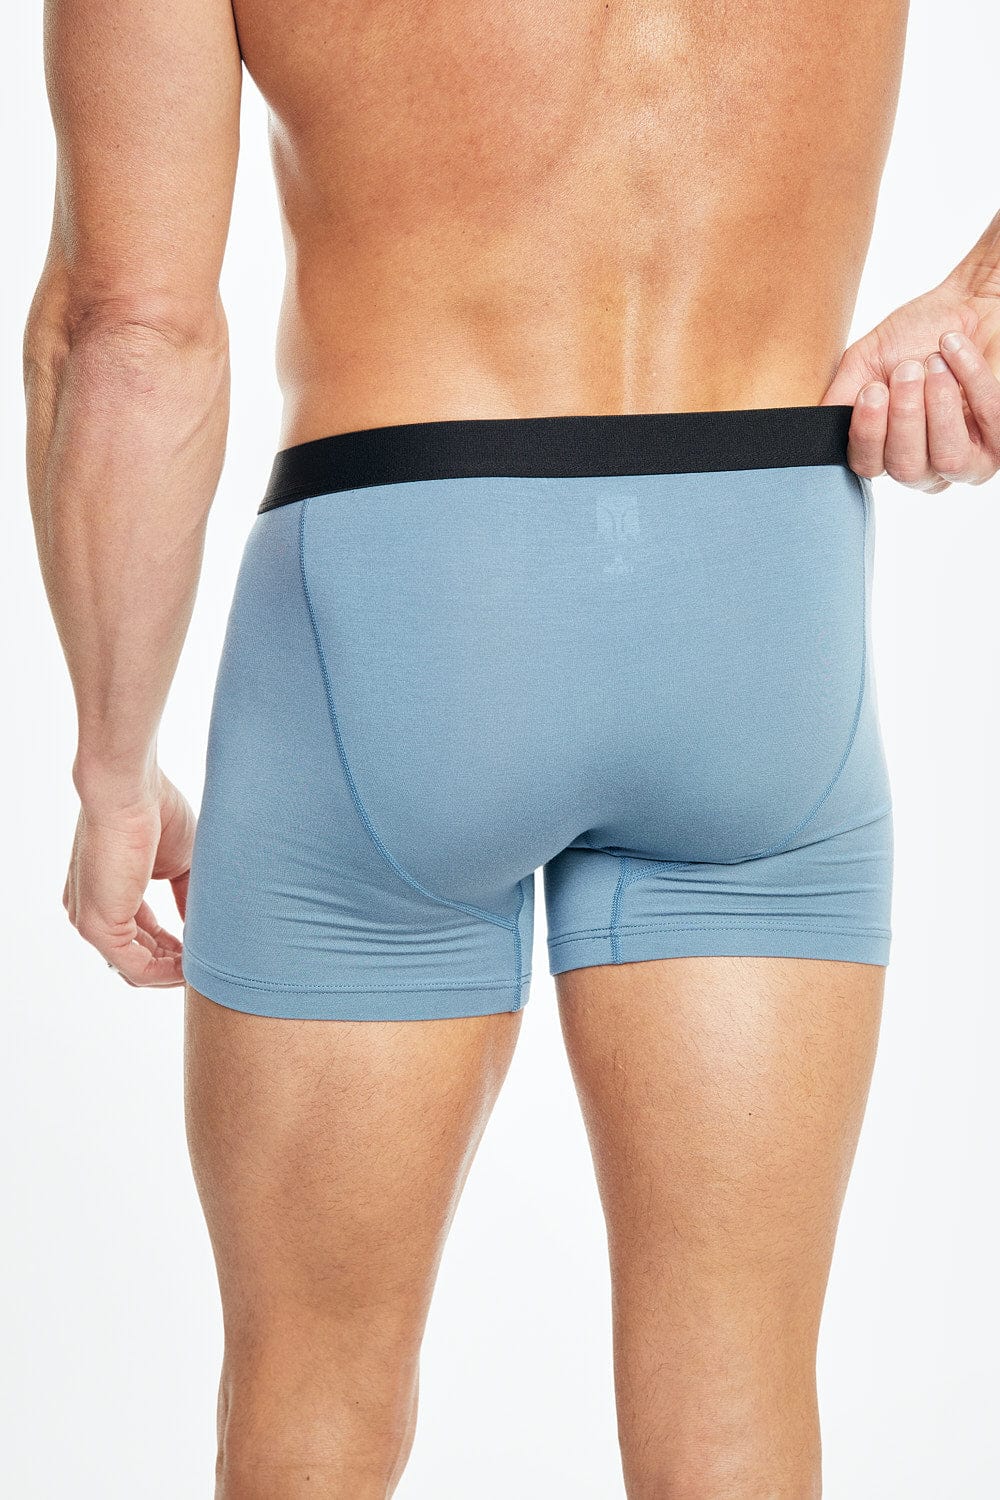 TANI Hybrid Mens Boxer Briefs With Horizontal Fly Mens Underwear Boxers for  Men - Comfort Men's Underwear Men's Boxer Shorts